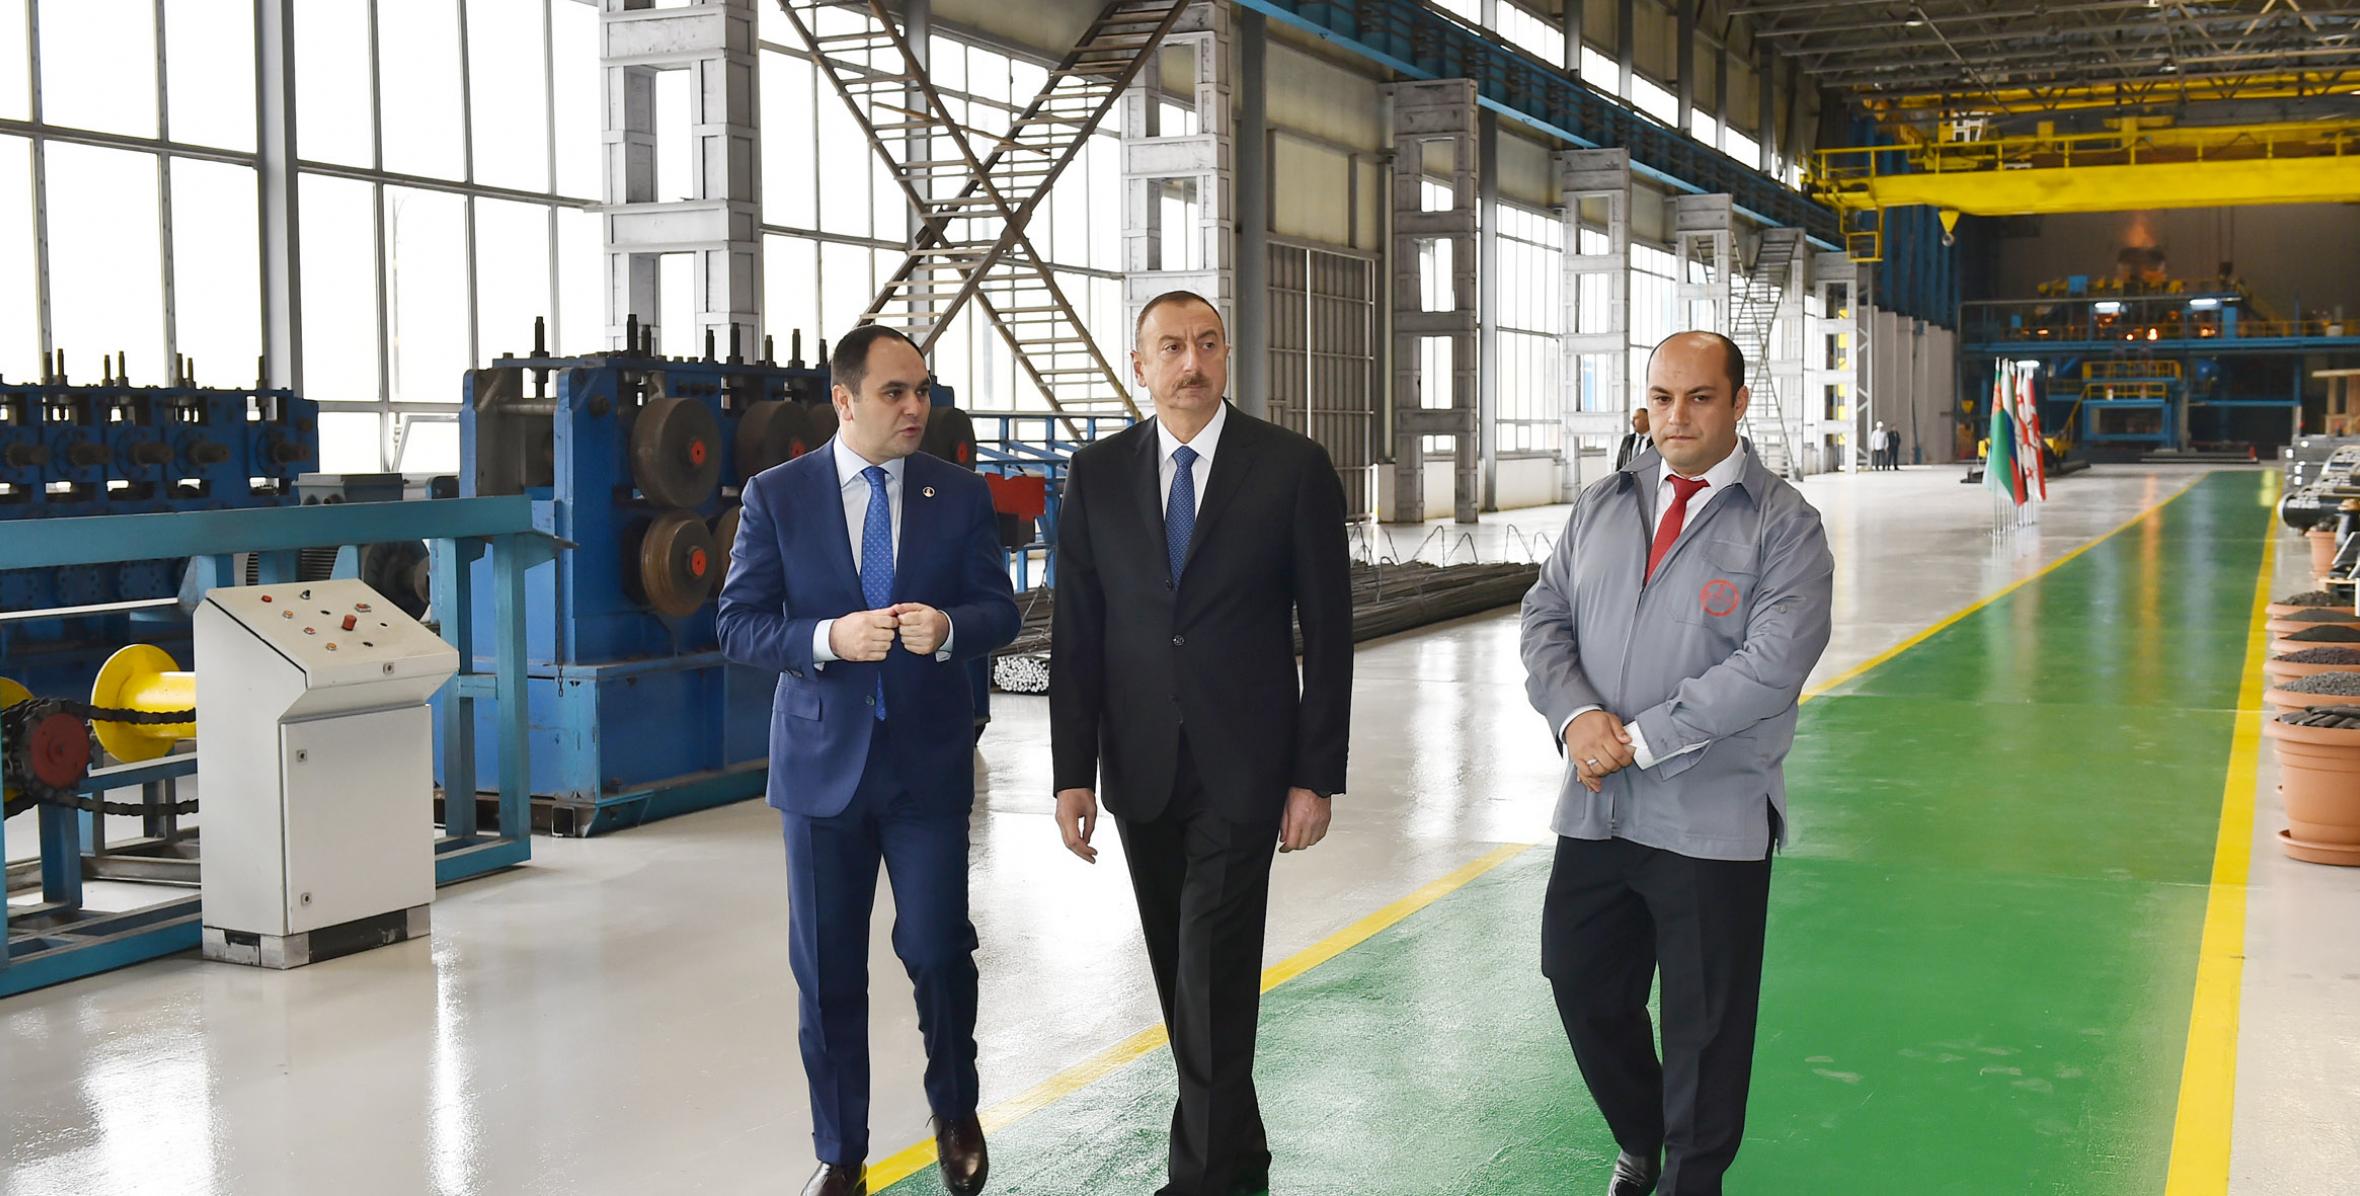 Ilham Aliyev inaugurated "Oksigen" plant in Baku